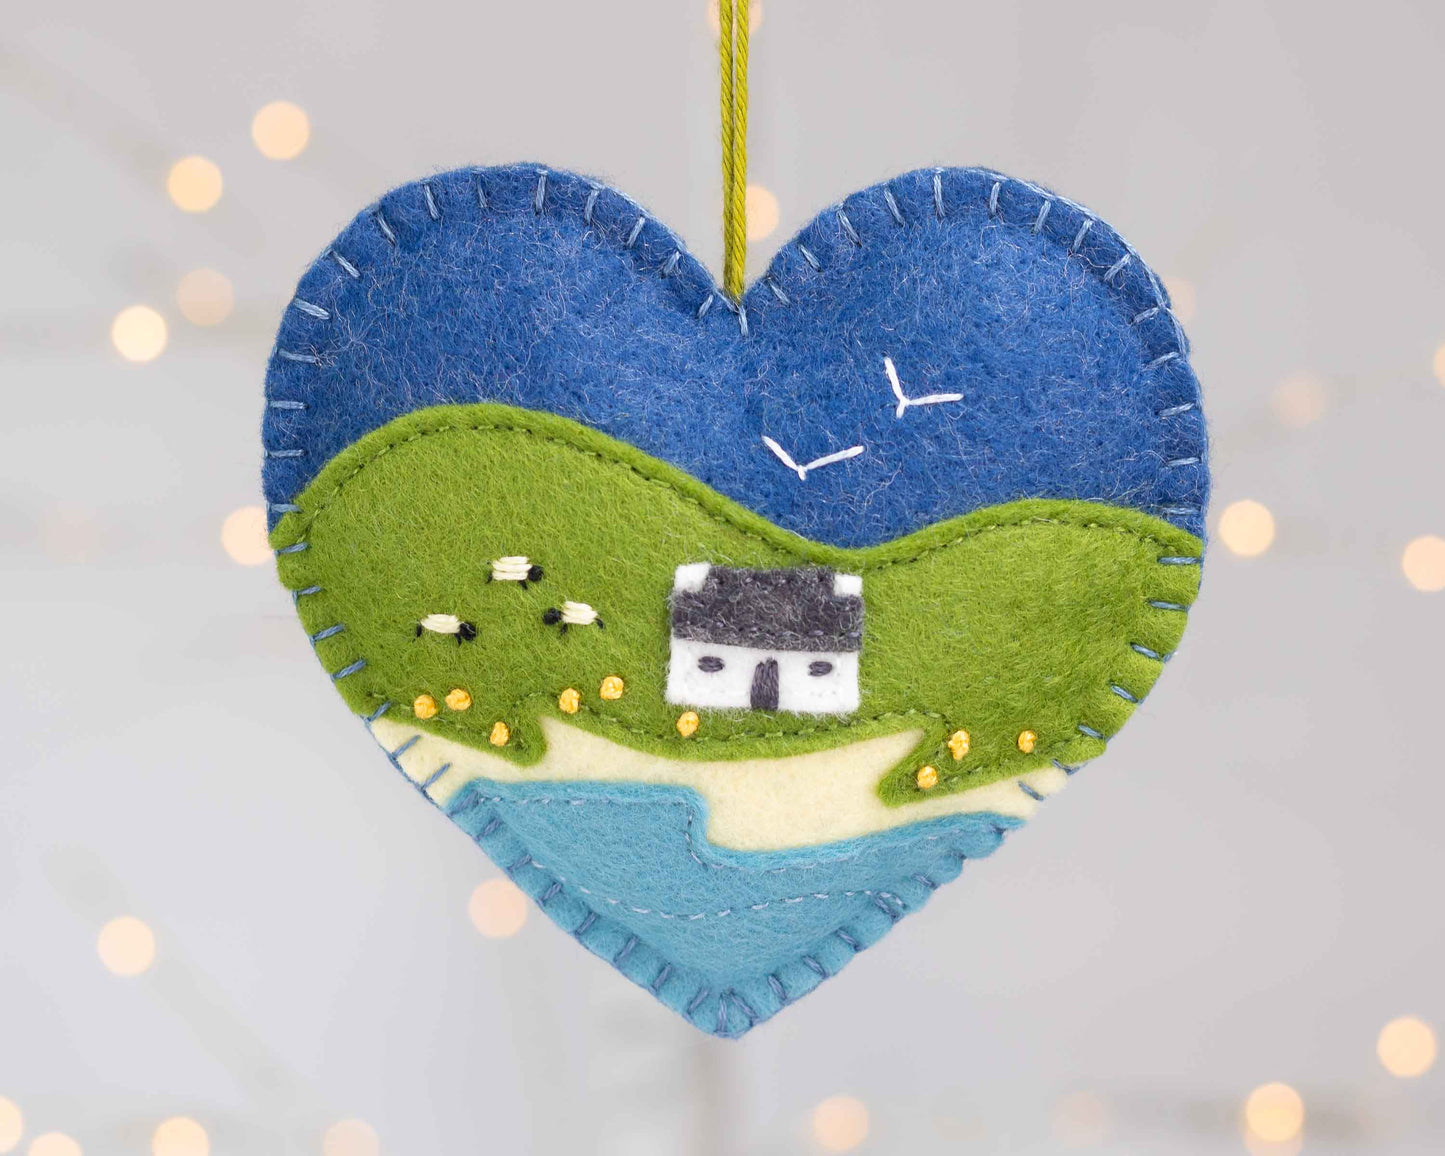 Irish Cottage Felt Heart Ornament